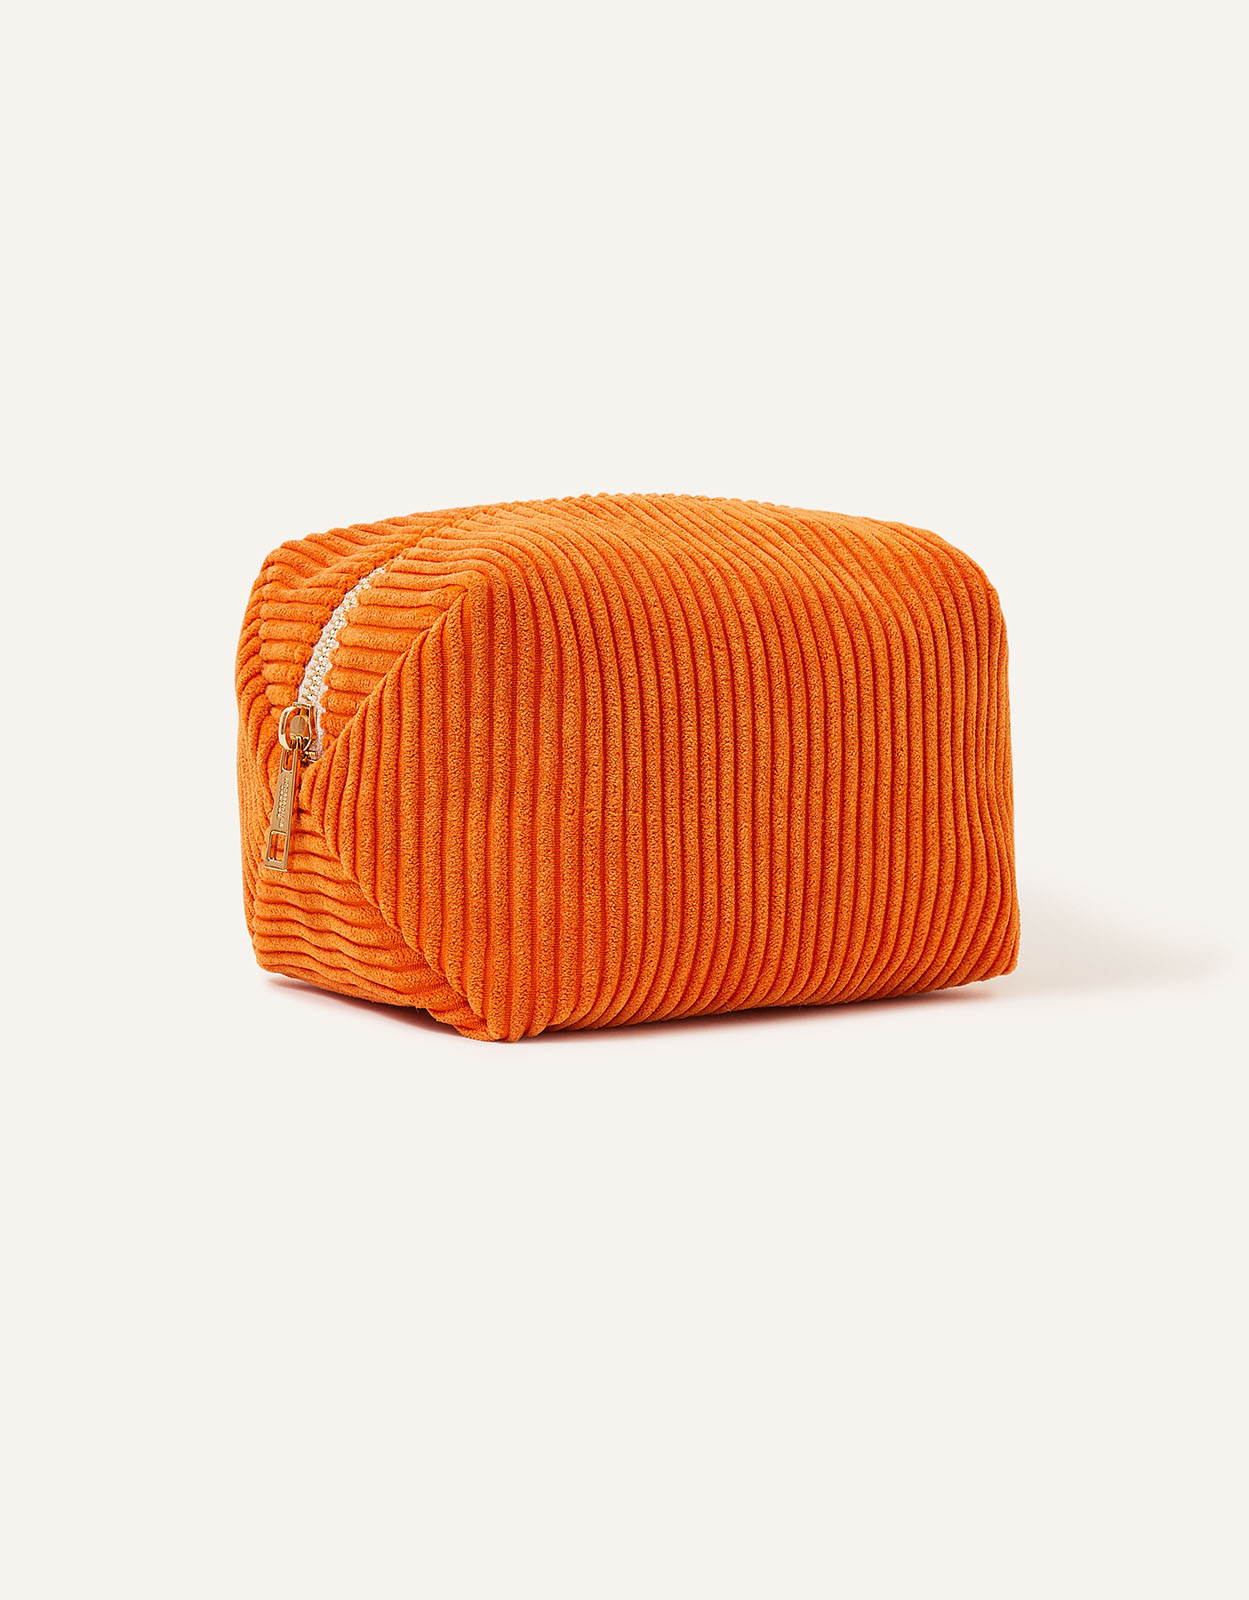 Accessorize Women's Cord Make Up Bag, Size: L 17 cm x W 10 cm